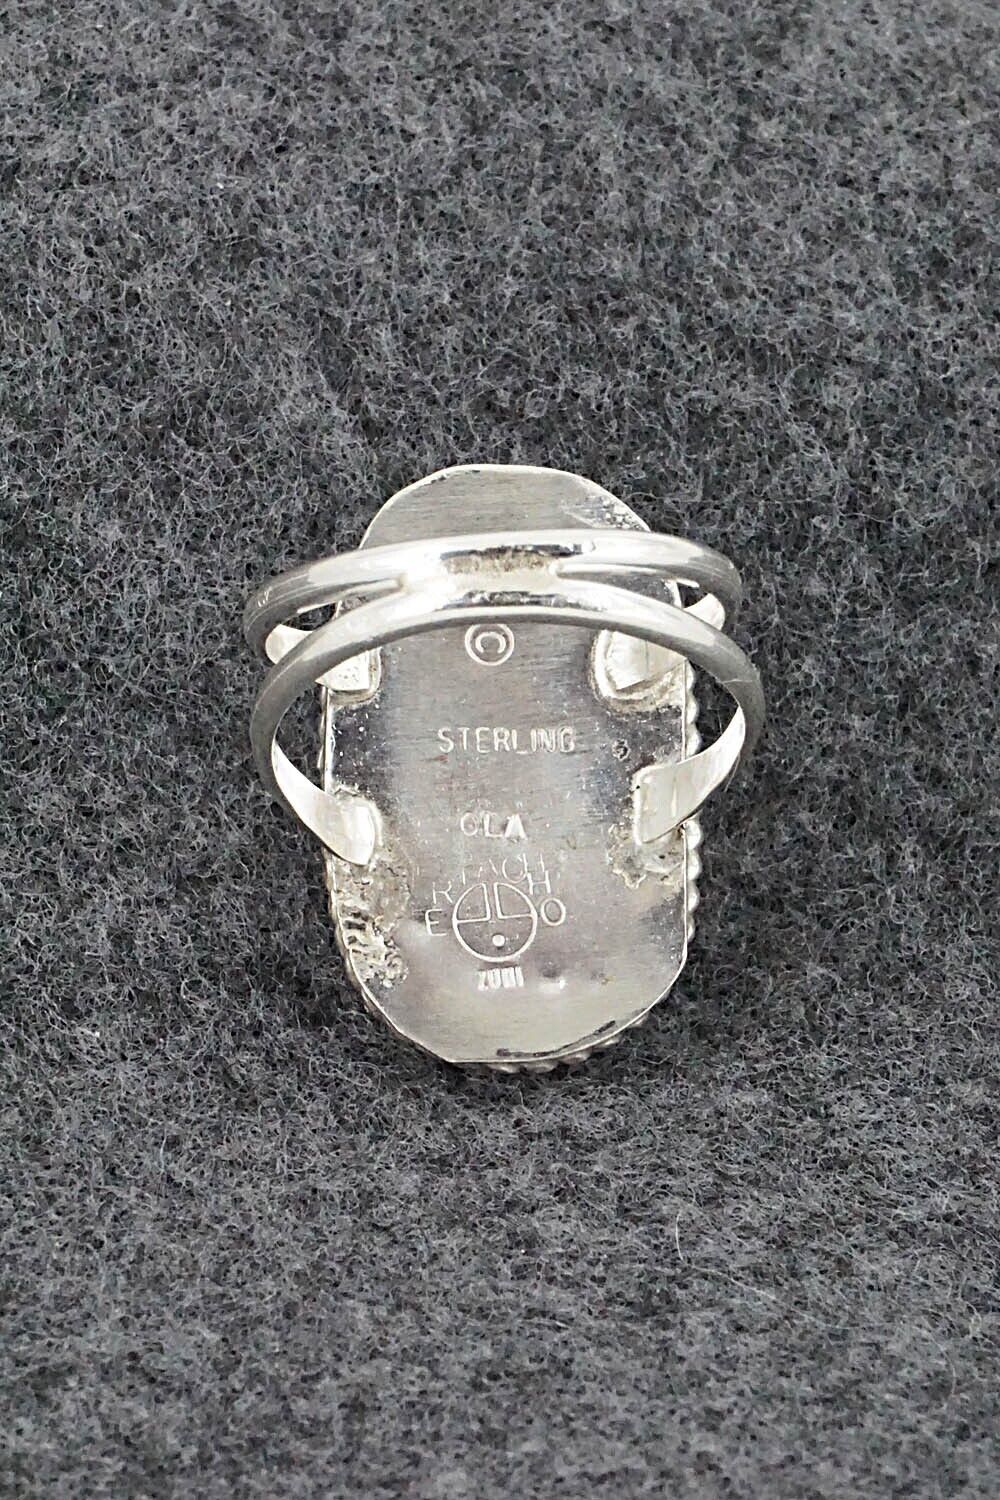 Multi Stone & Sterling Silver Ring - Ola Eriacho - Size 7